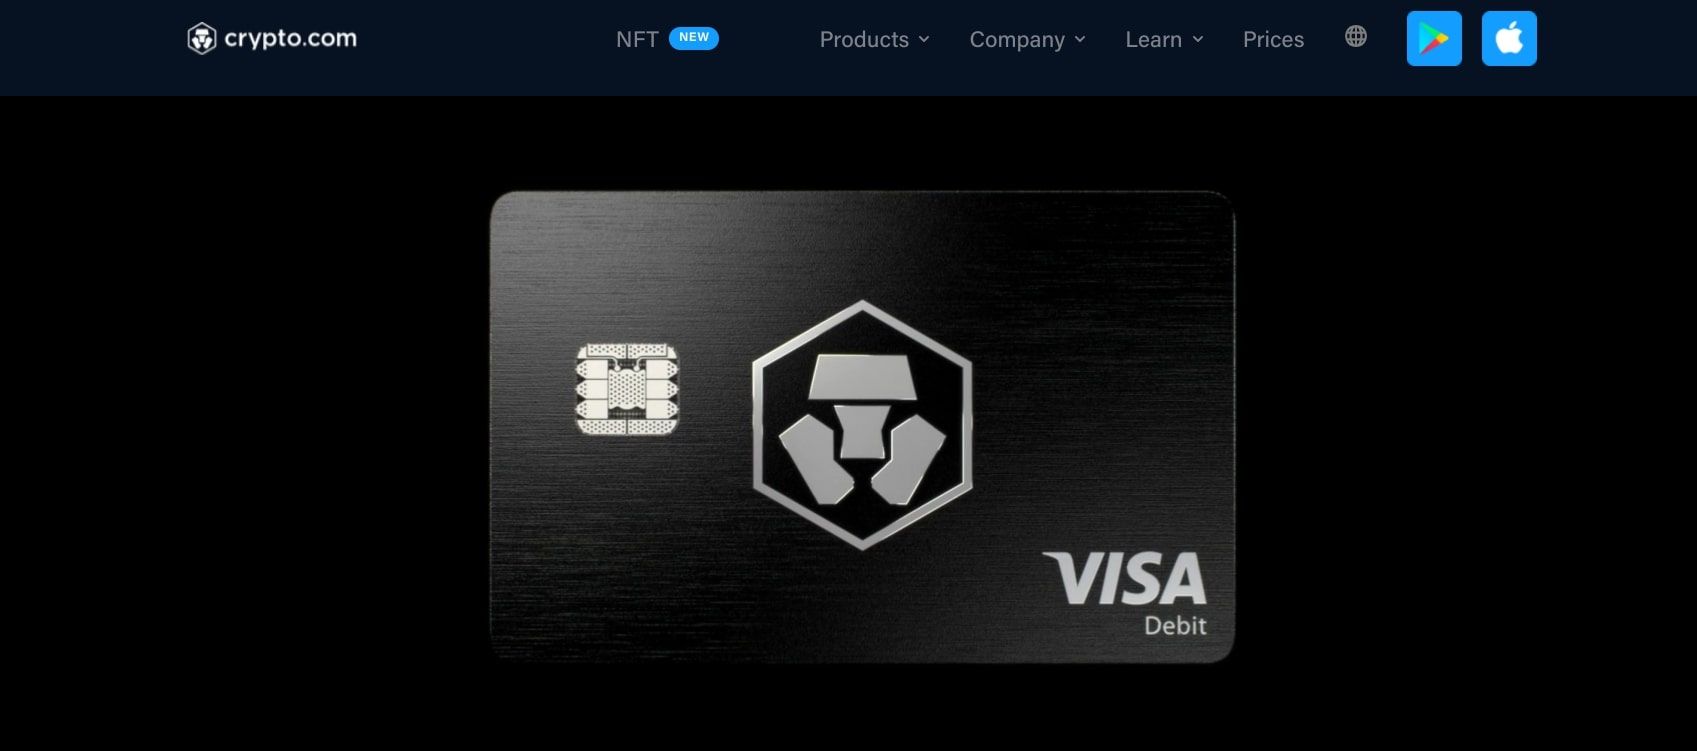 crypto.com credit card cash back